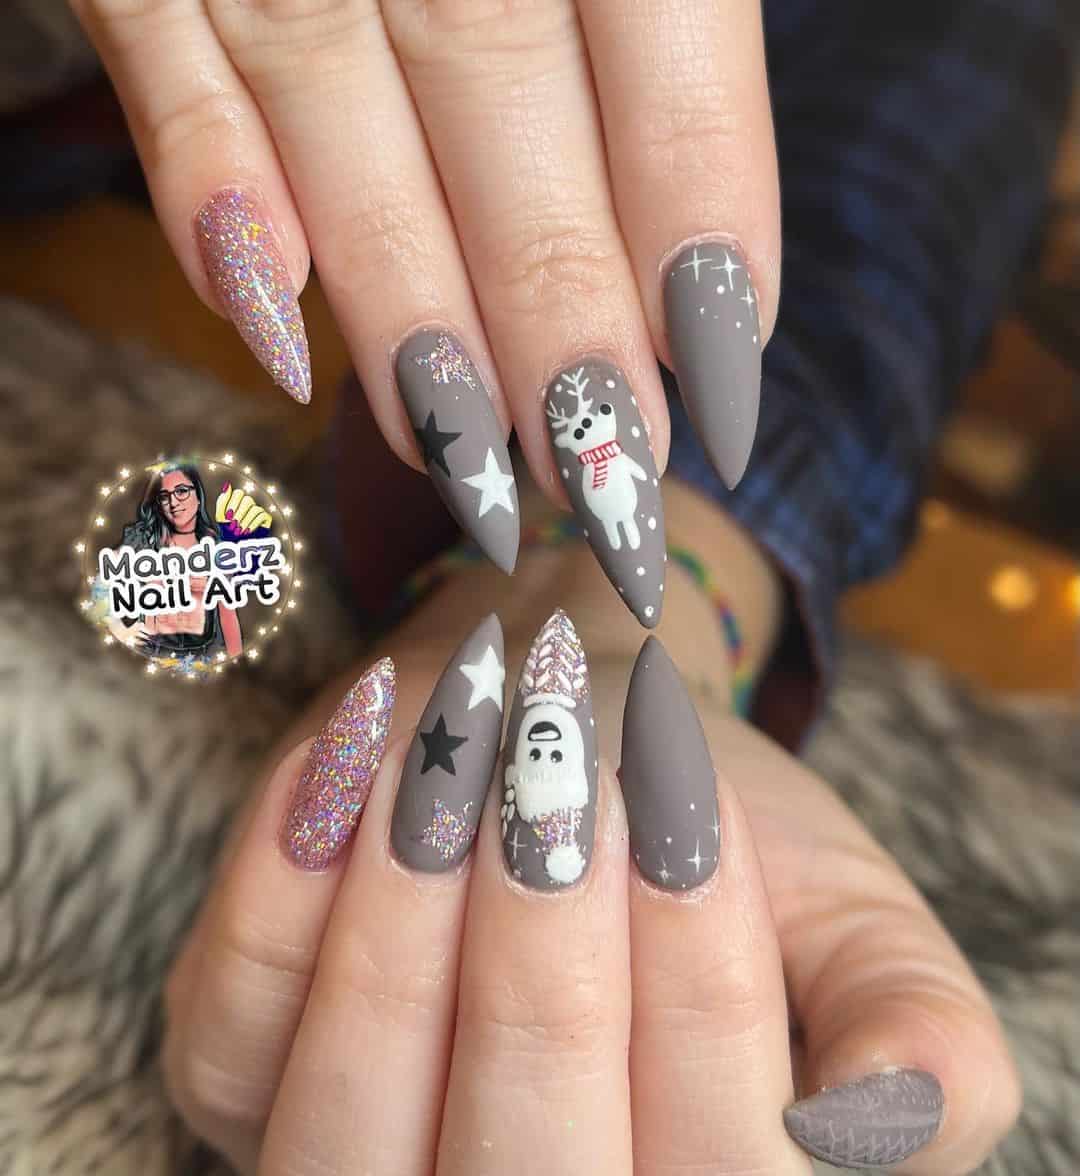 Grey Stiletto Manicure With Glitter